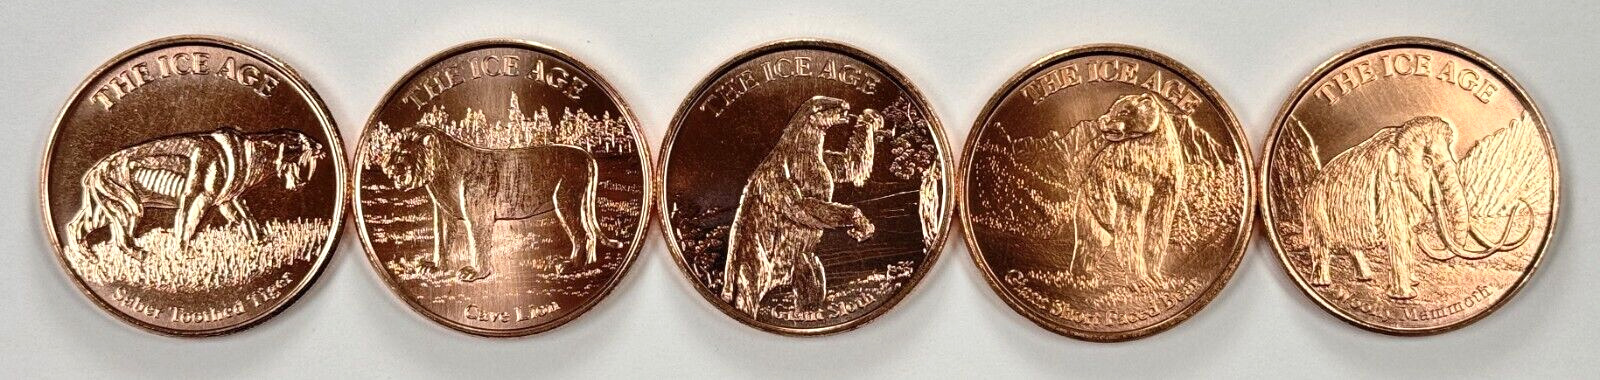 Copper Coins * One Oz. Each * .999 Bullion * US Minted * Five Piece Ice Age Set